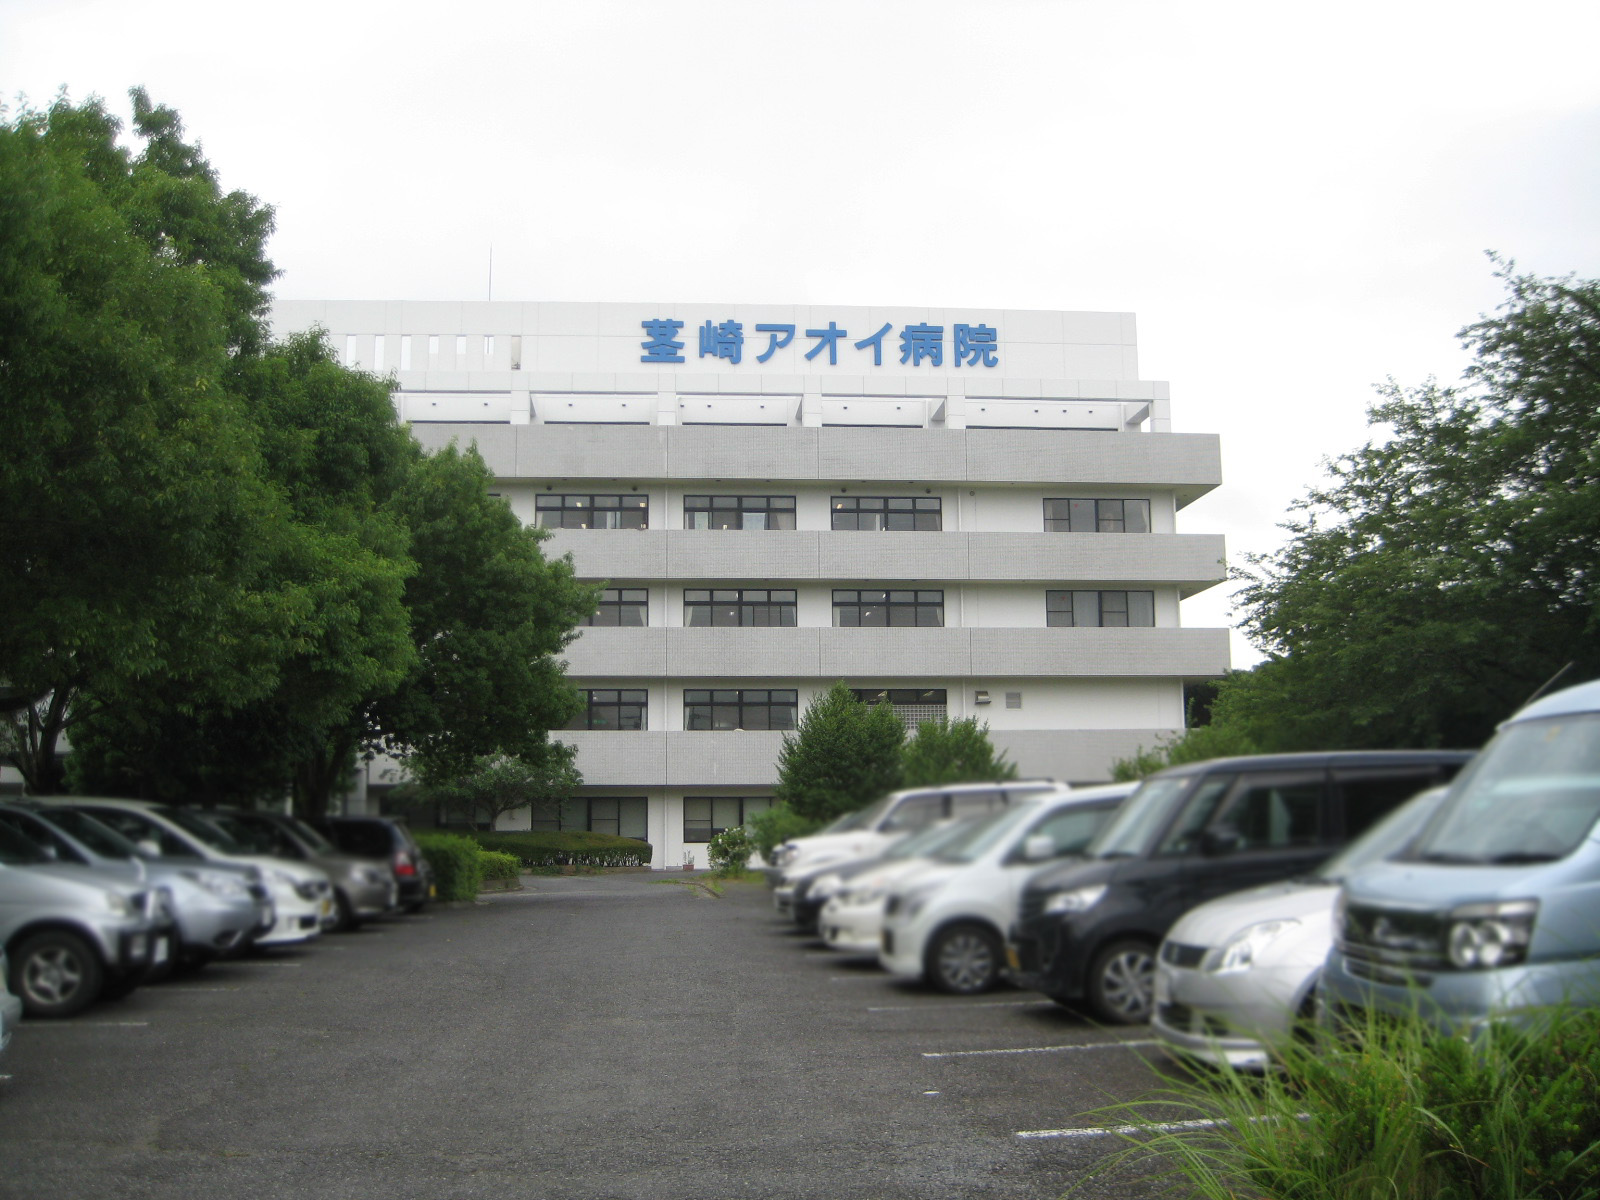 Hospital. 3800m until Kukizaki Aoi hospital (hospital)